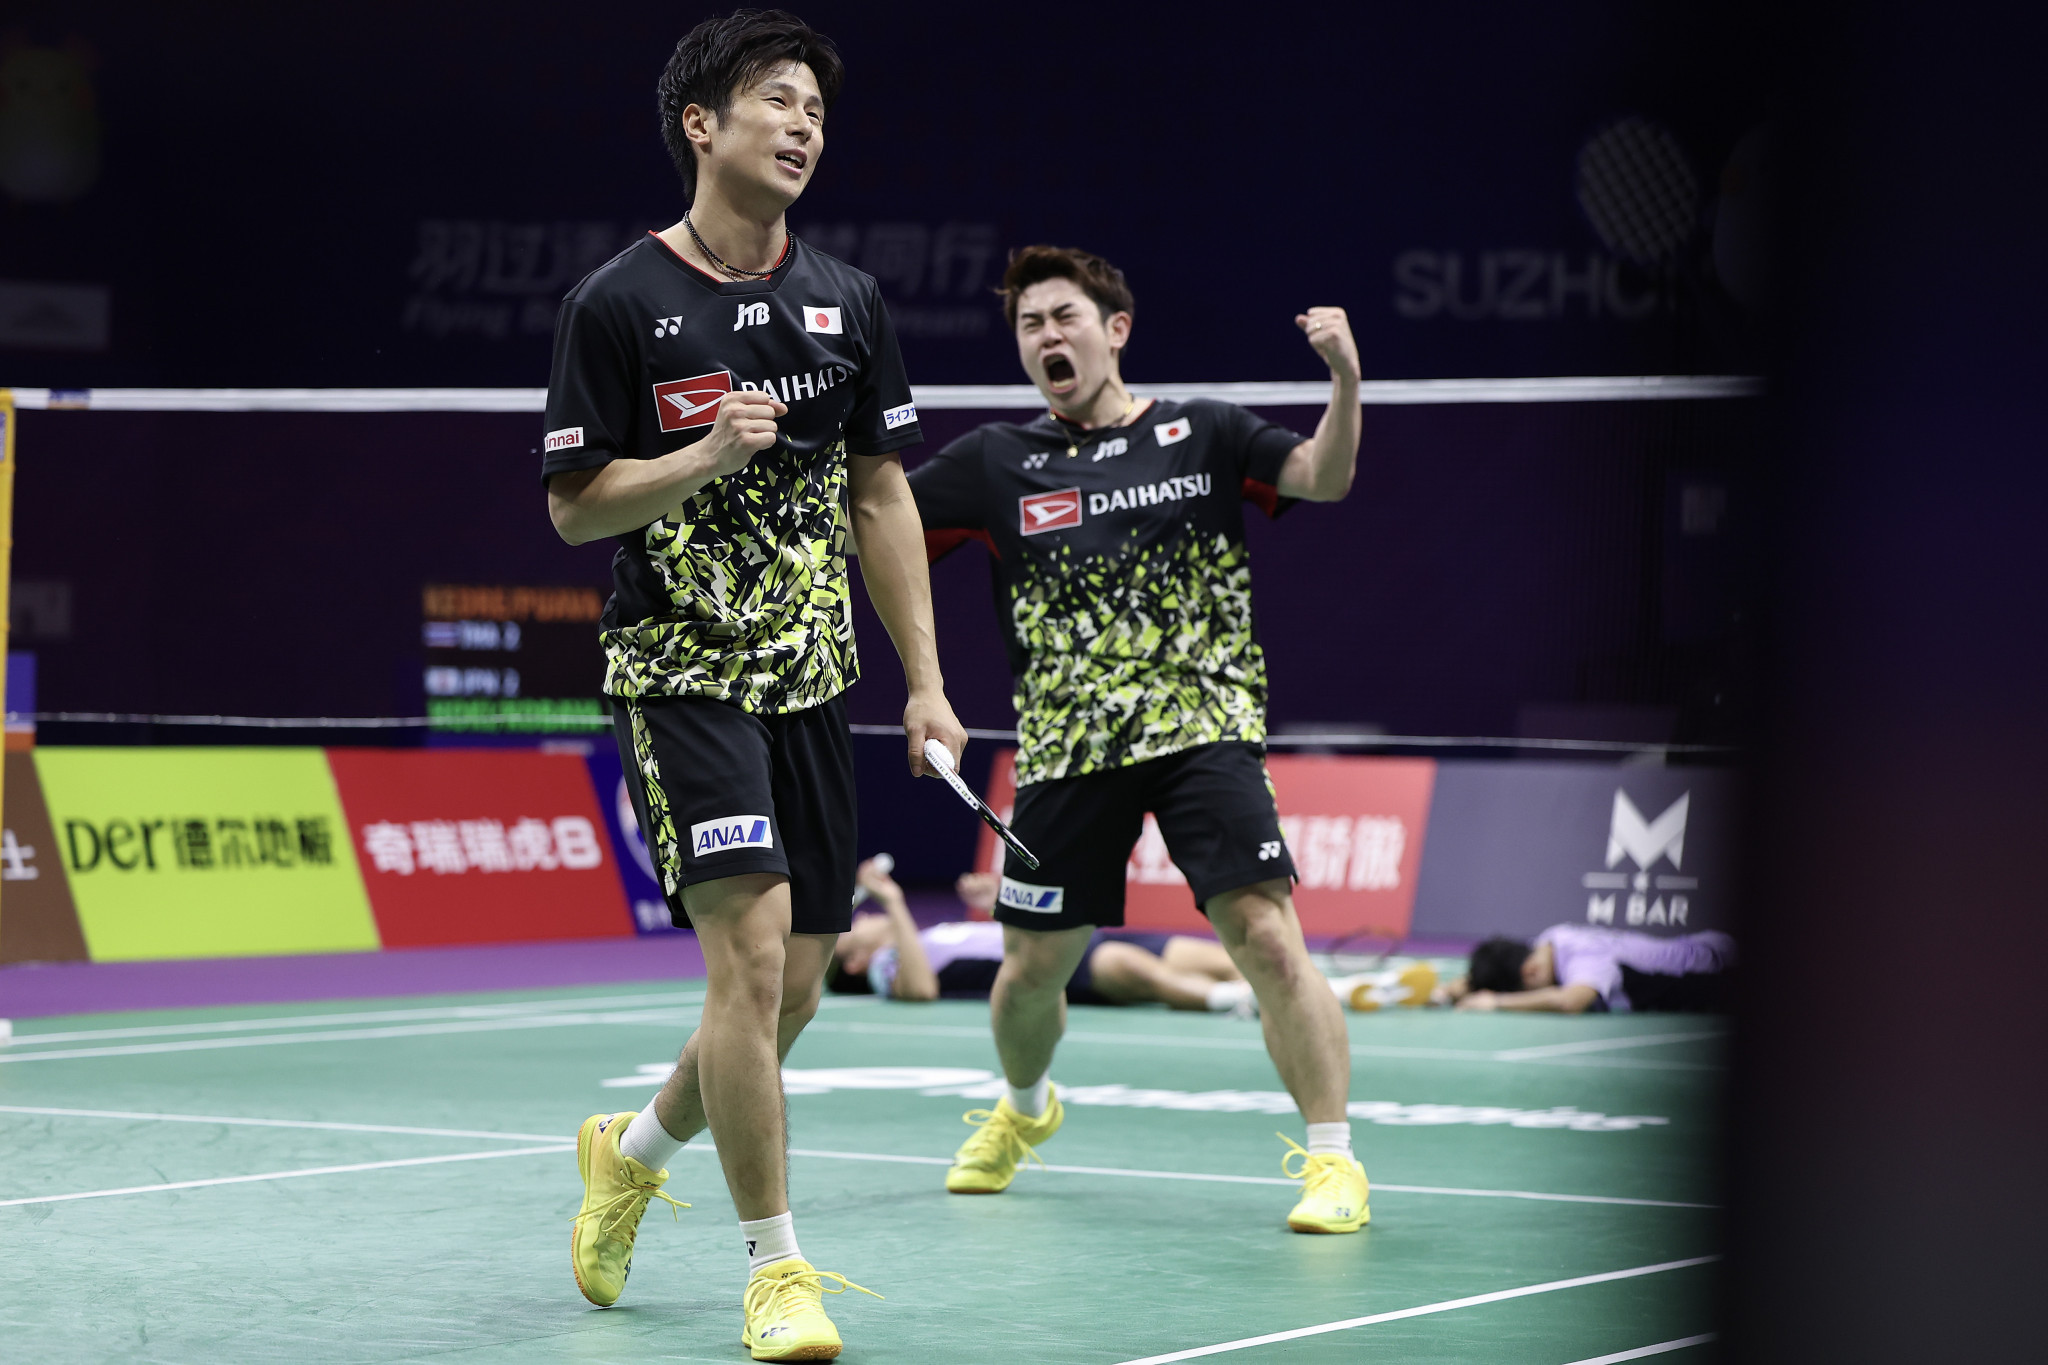 Takuro Hoki and Yugo Kobayashi won a crucial doubles contest to send Japan through ©Getty Images